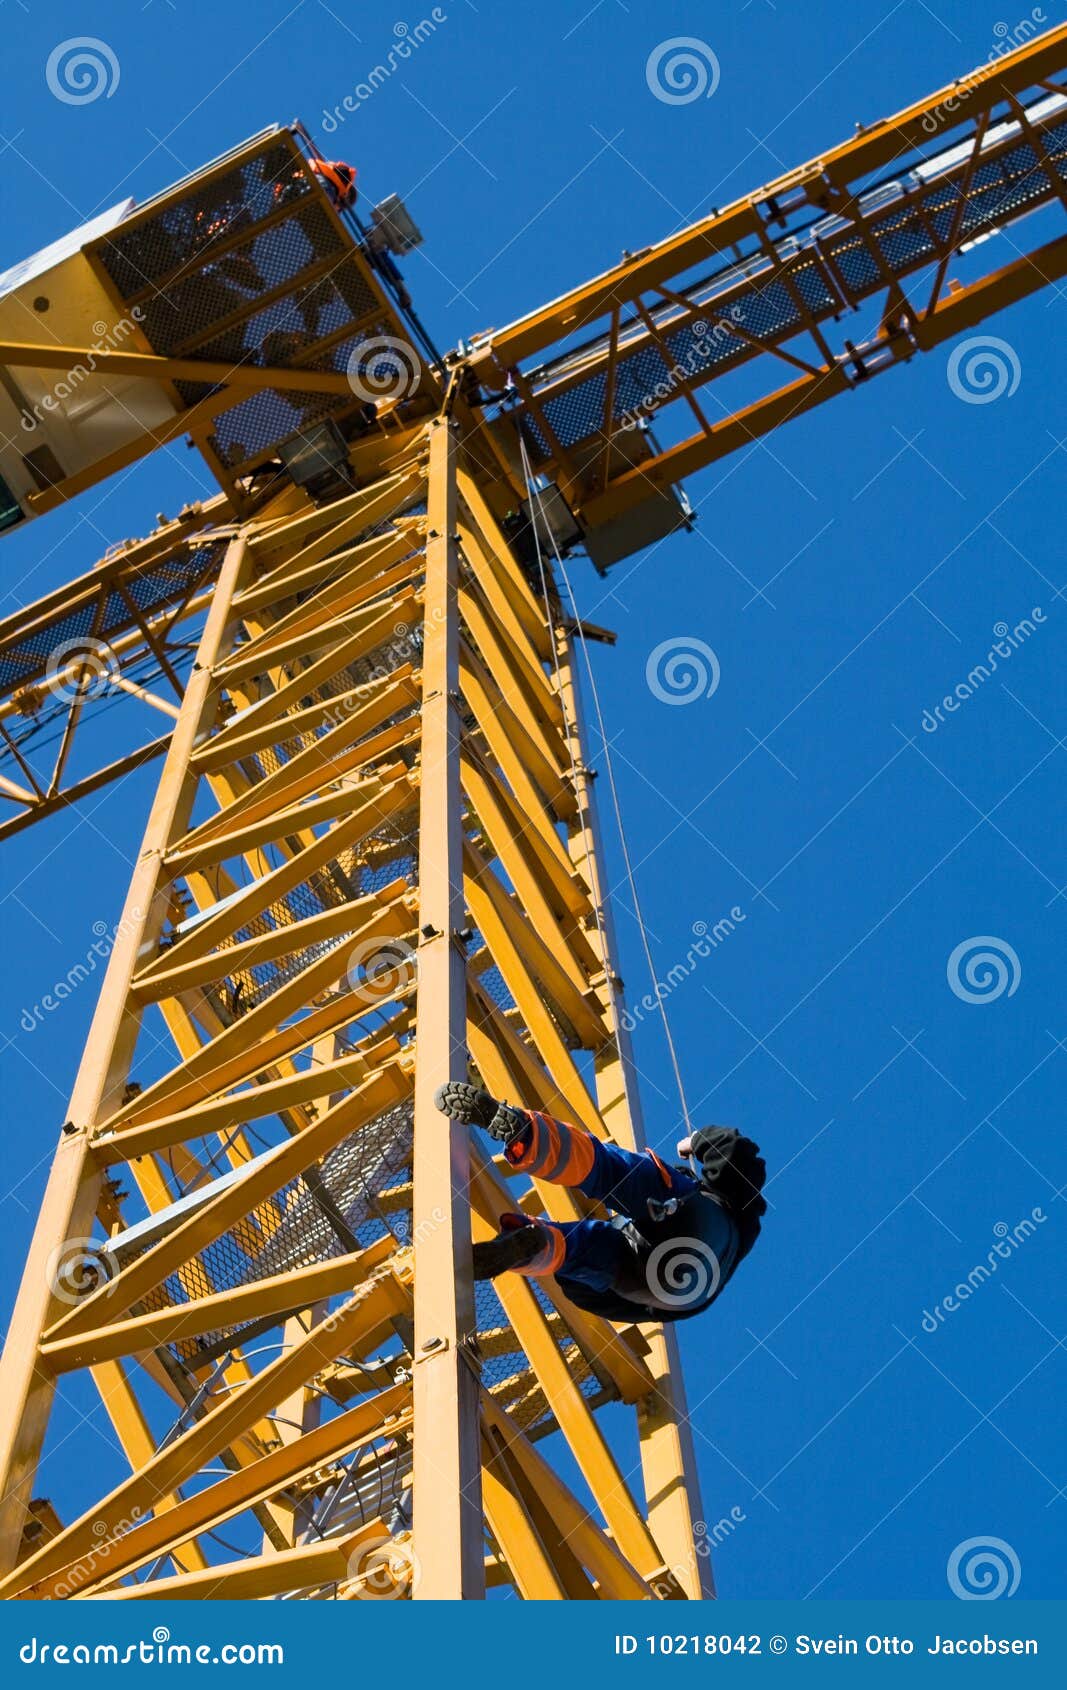 evacuation from construct-crane